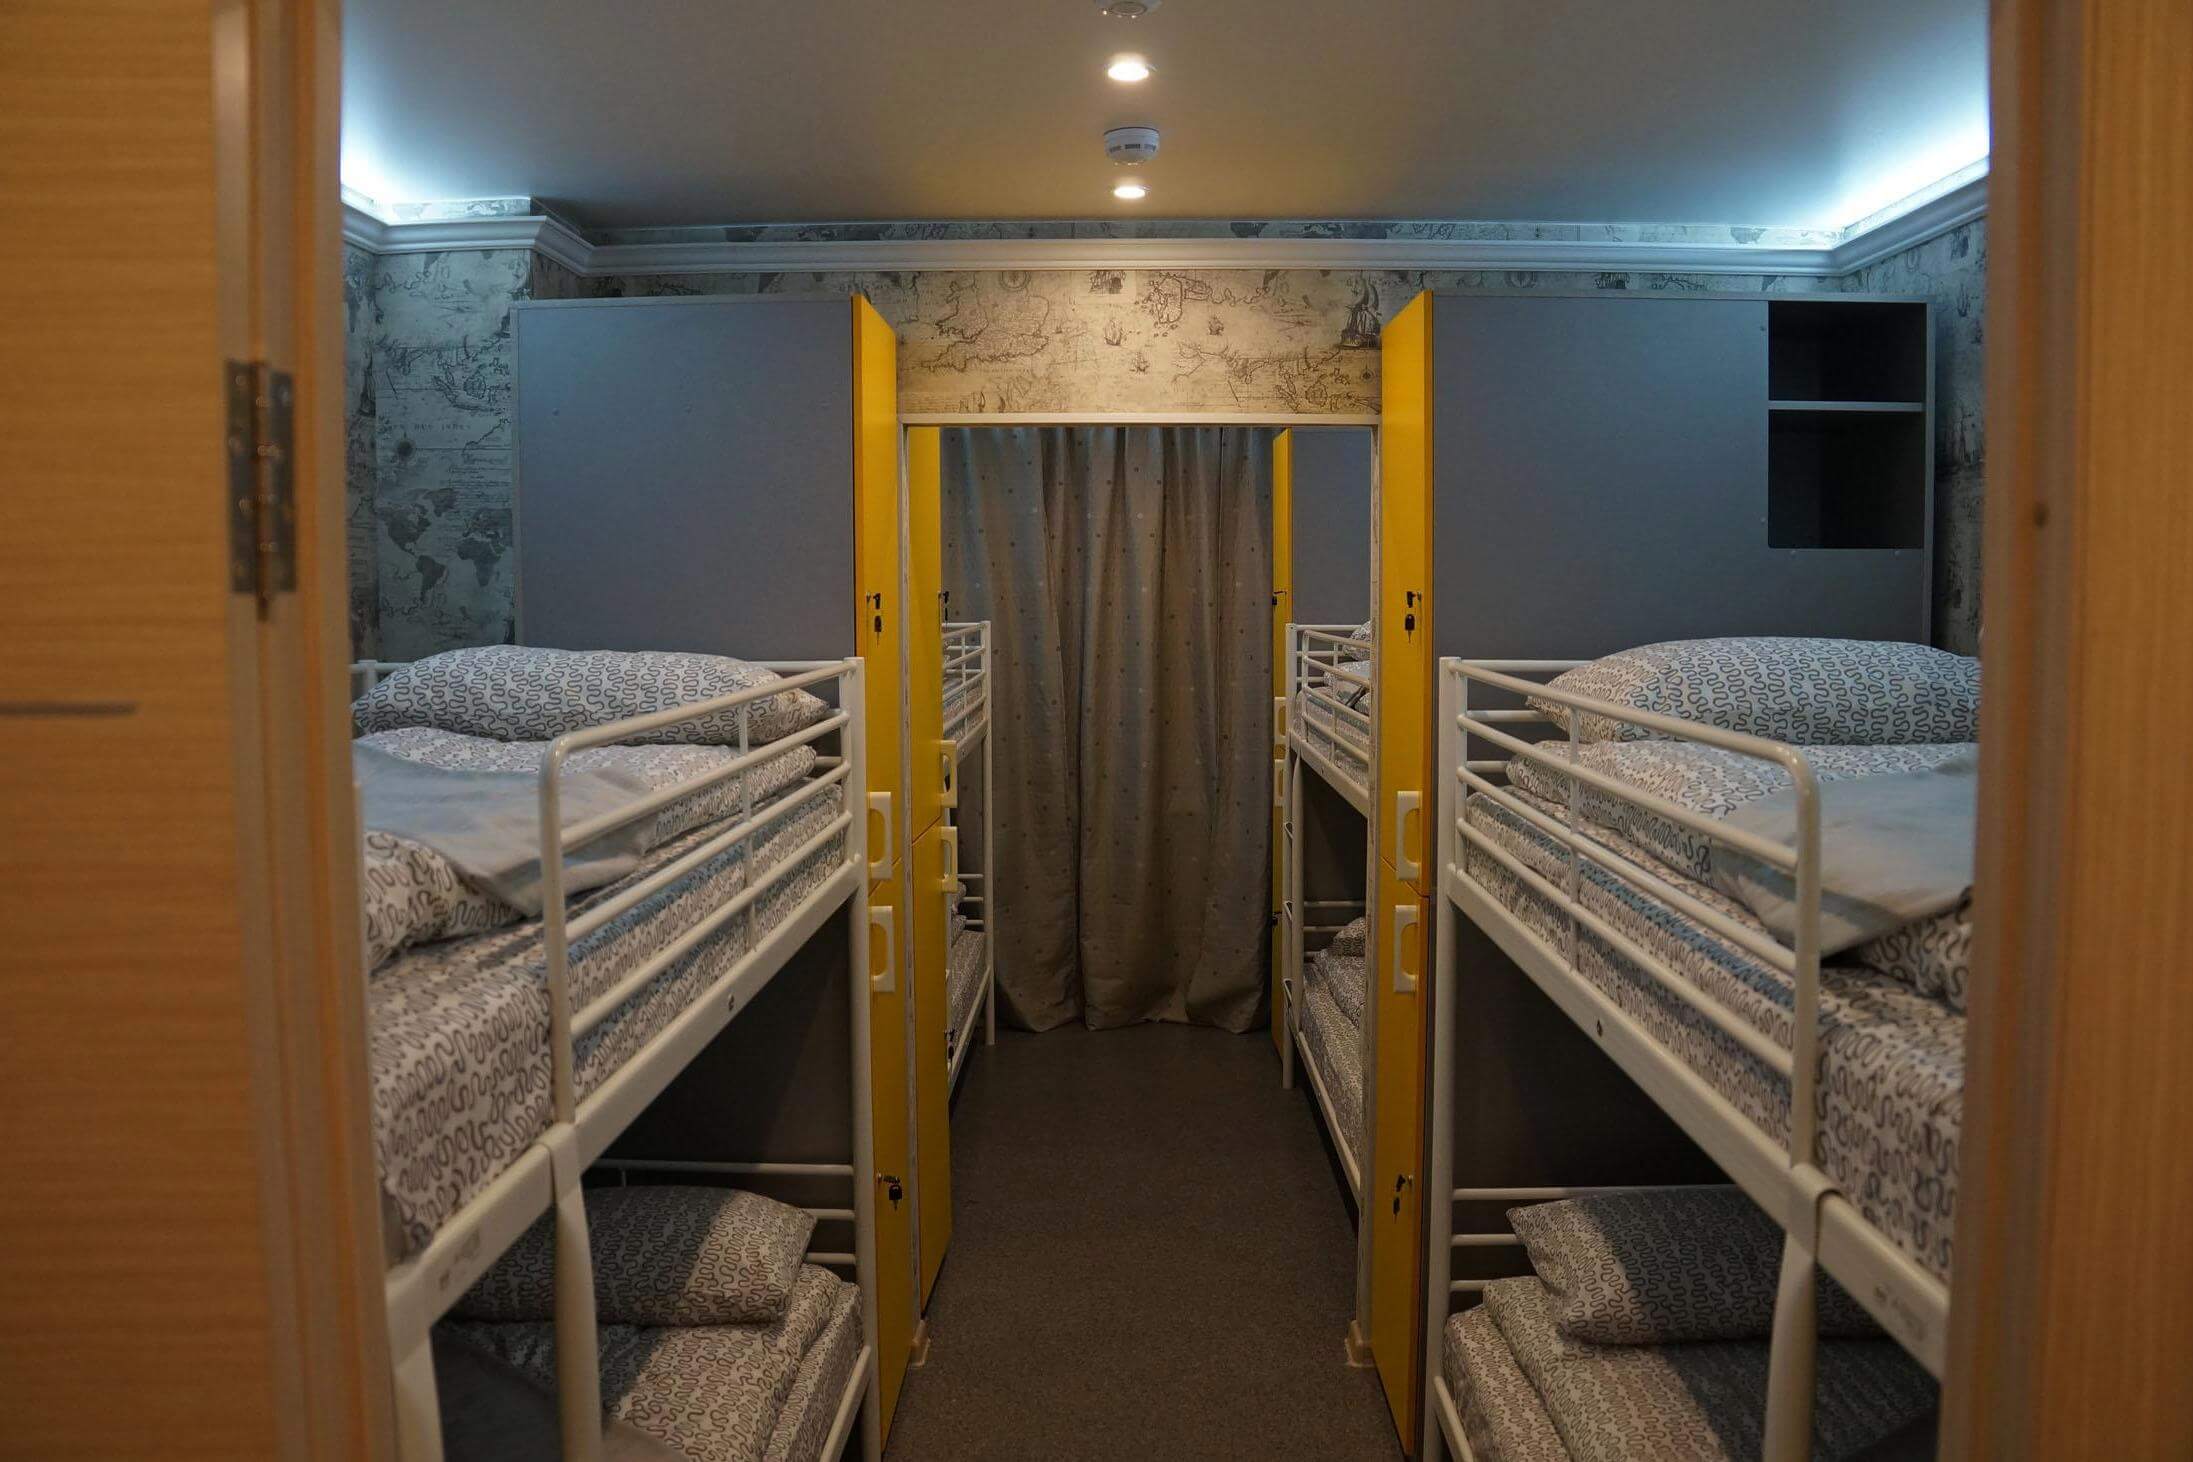 Общая комната с двухъярусными кроватями.